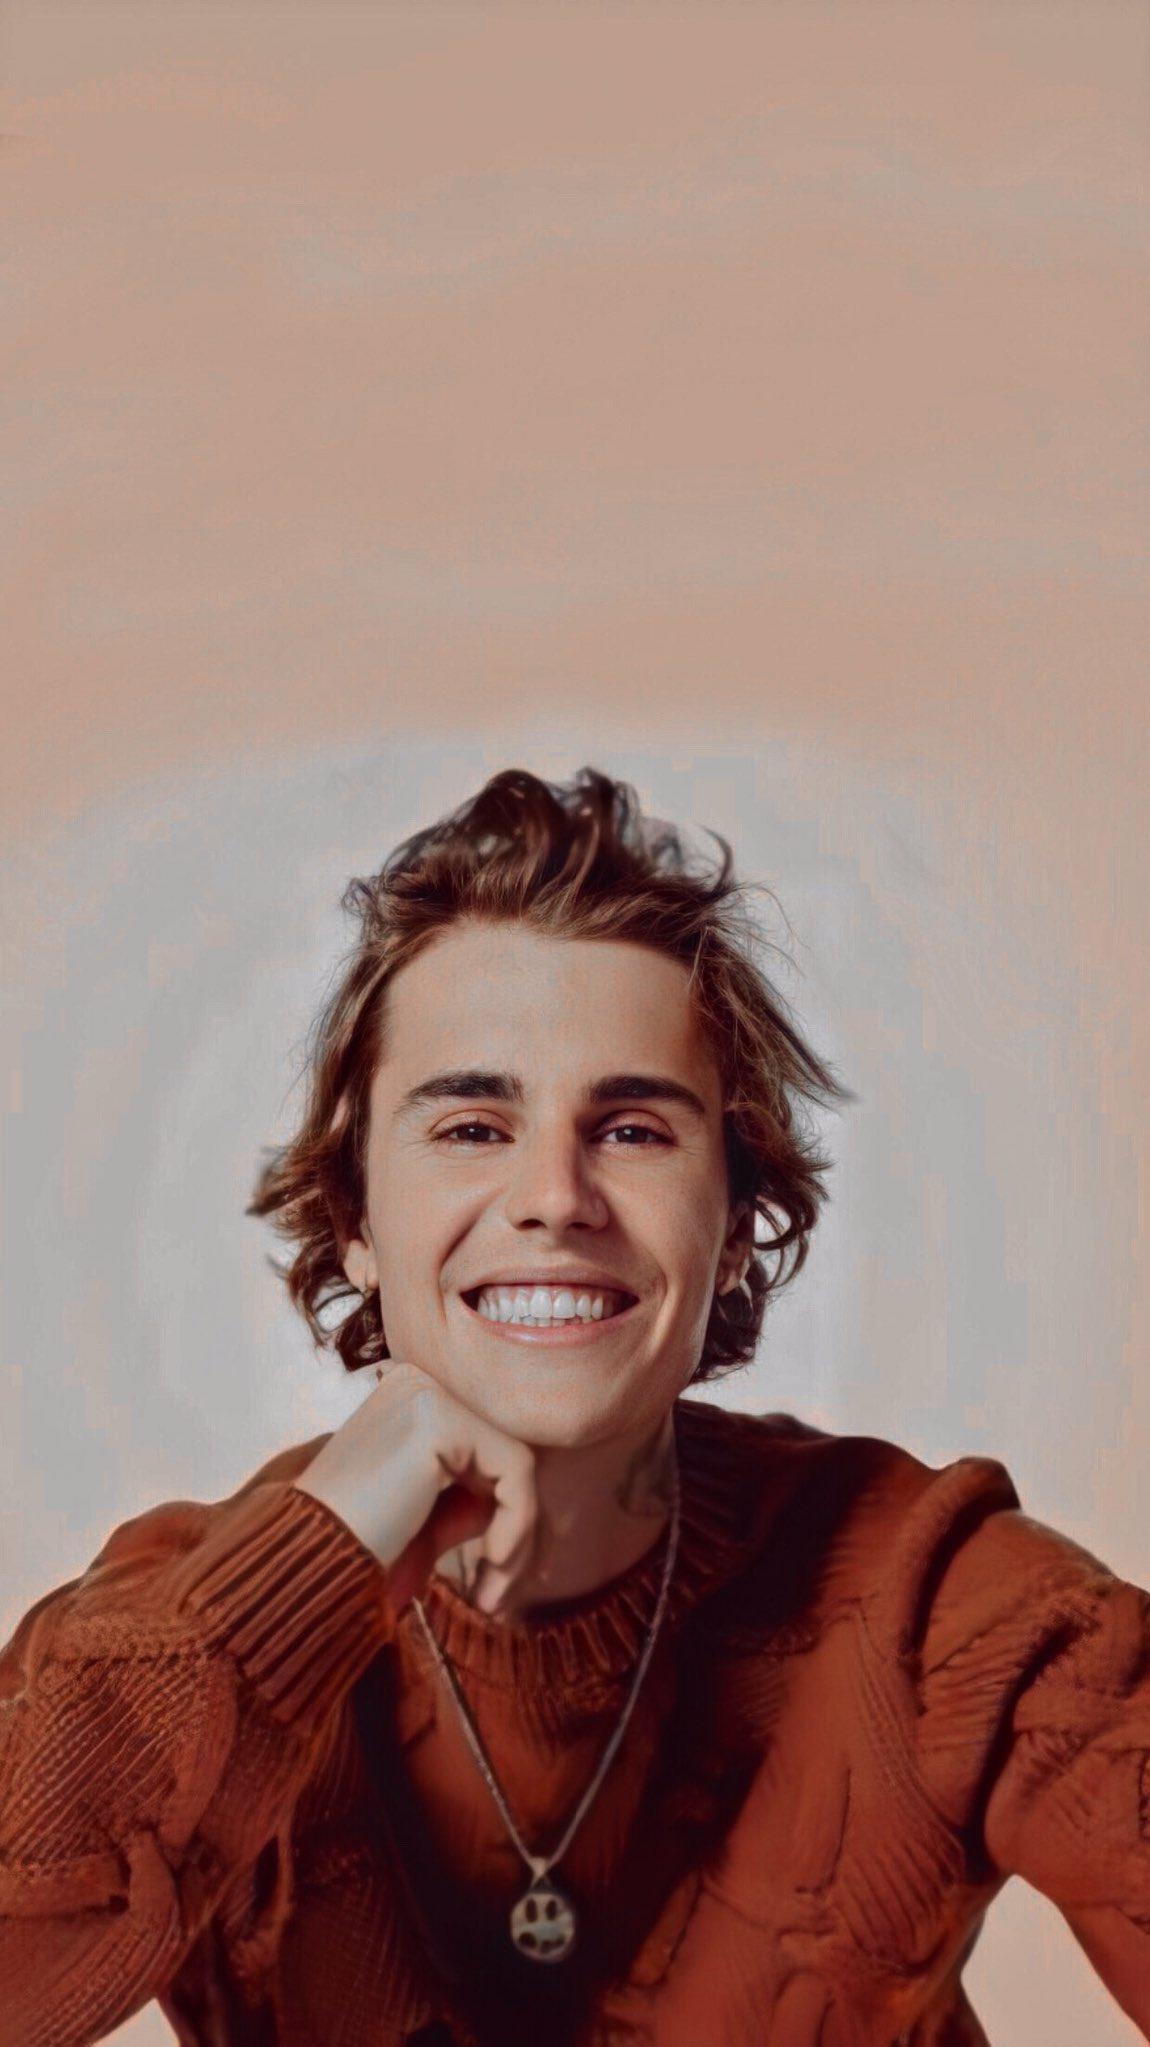 Justin Bieber Wallpapers   Top 65 Justin Bieber Backgrounds Download